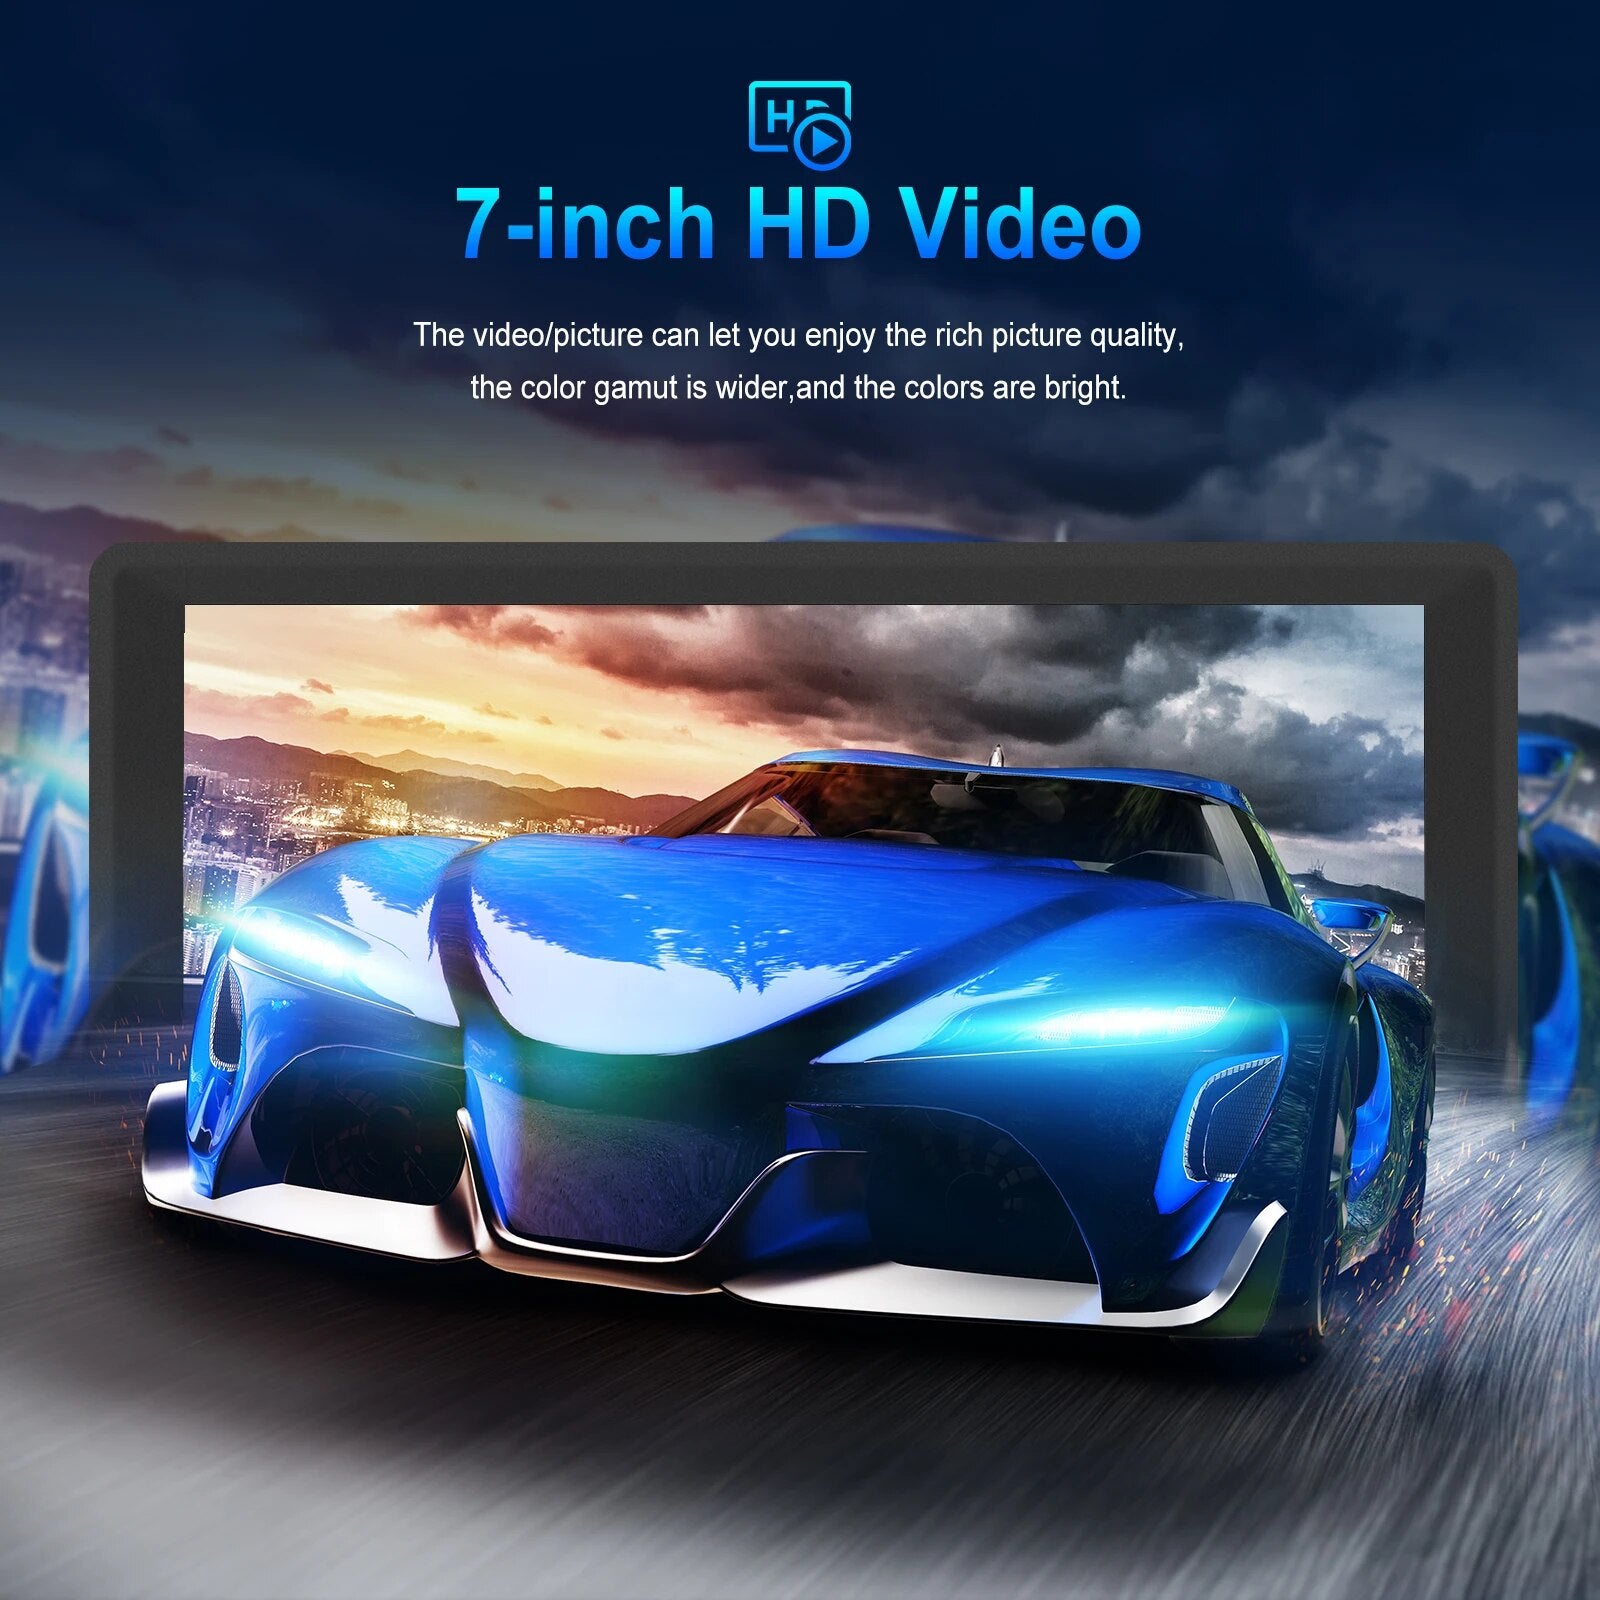 Podofo Universal 7'' Car Radio Carplay AirPlay Auto MP5 Player For Nissan Toyota Lada Honda Kia Support Camera